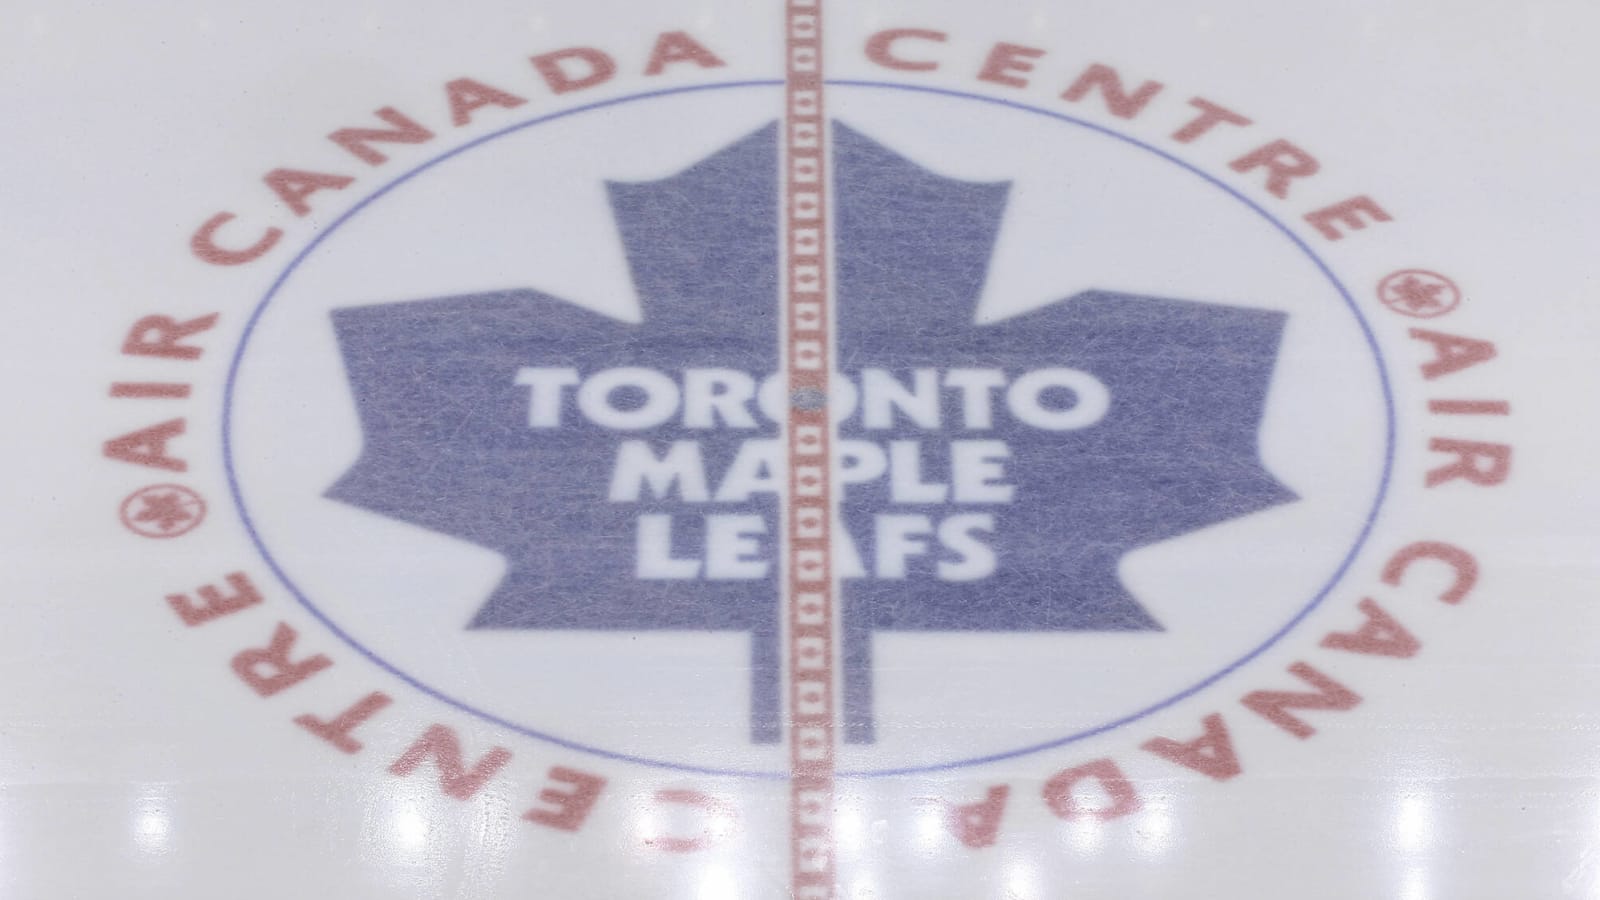 Battling brain tumor, Rodion Amirov lifts up his Toronto Maple Leafs teammates